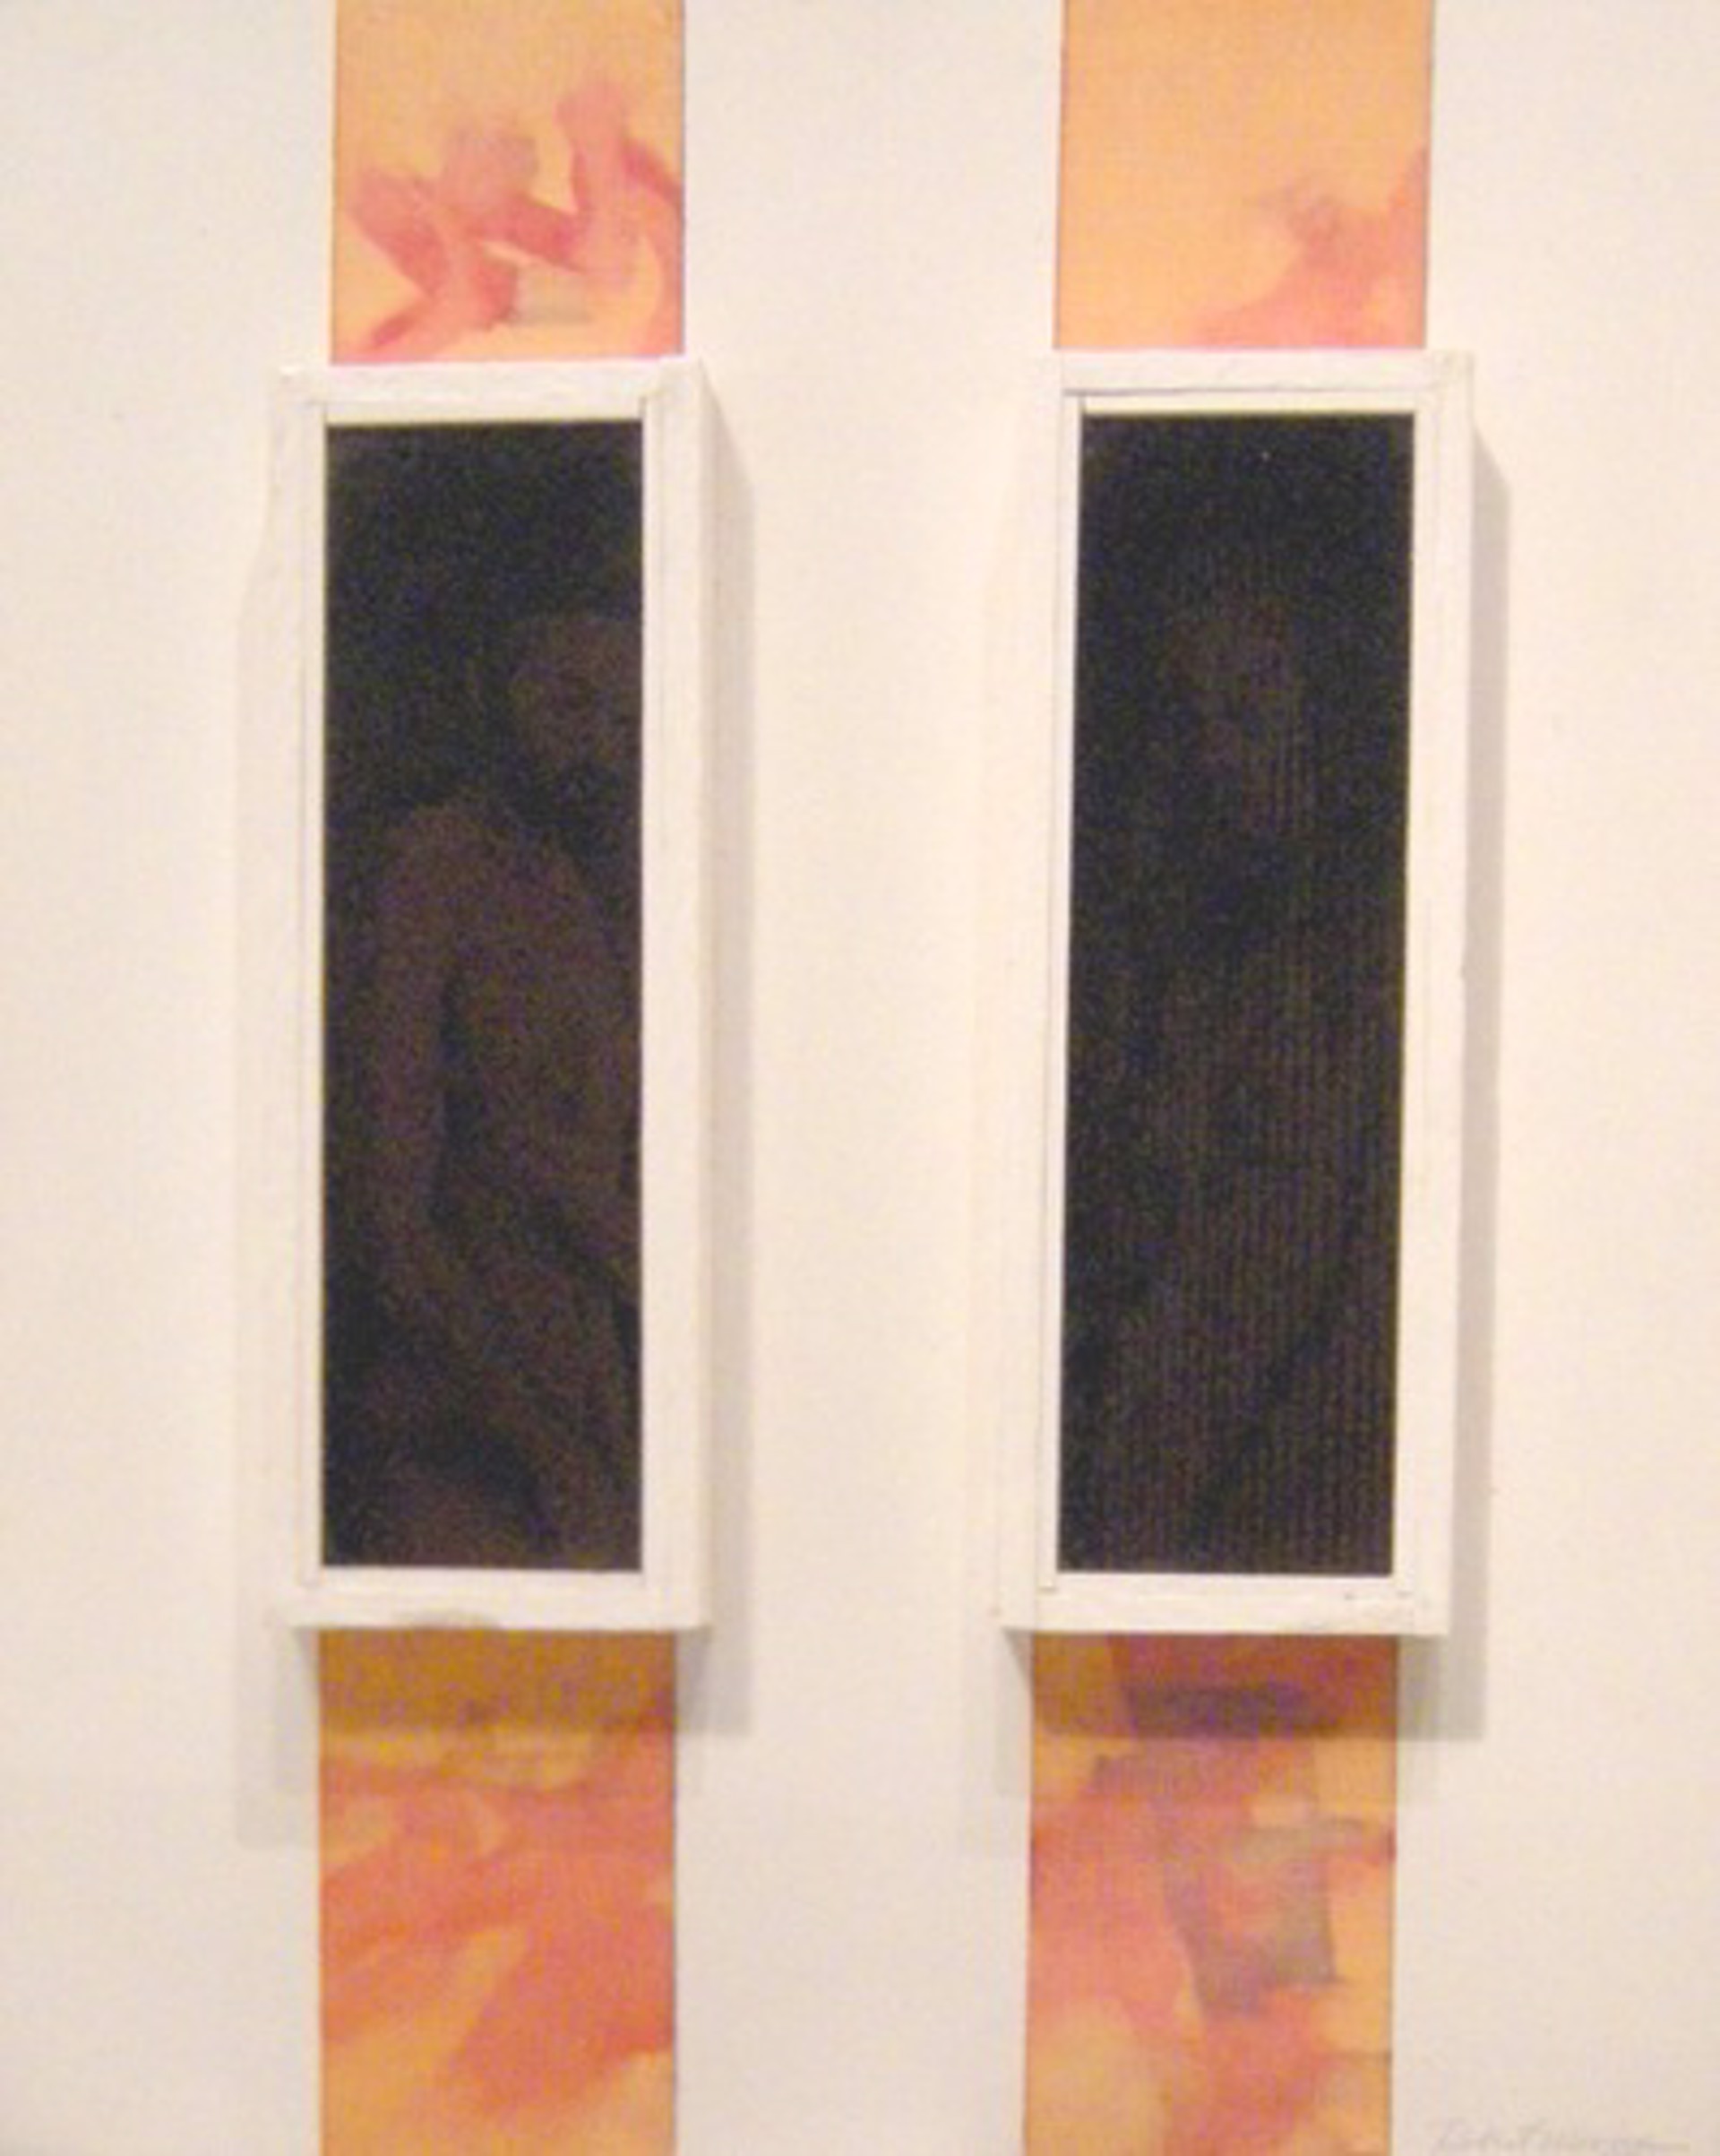 Assemblage w 2 Figures in 2 Windows by Robert Morris